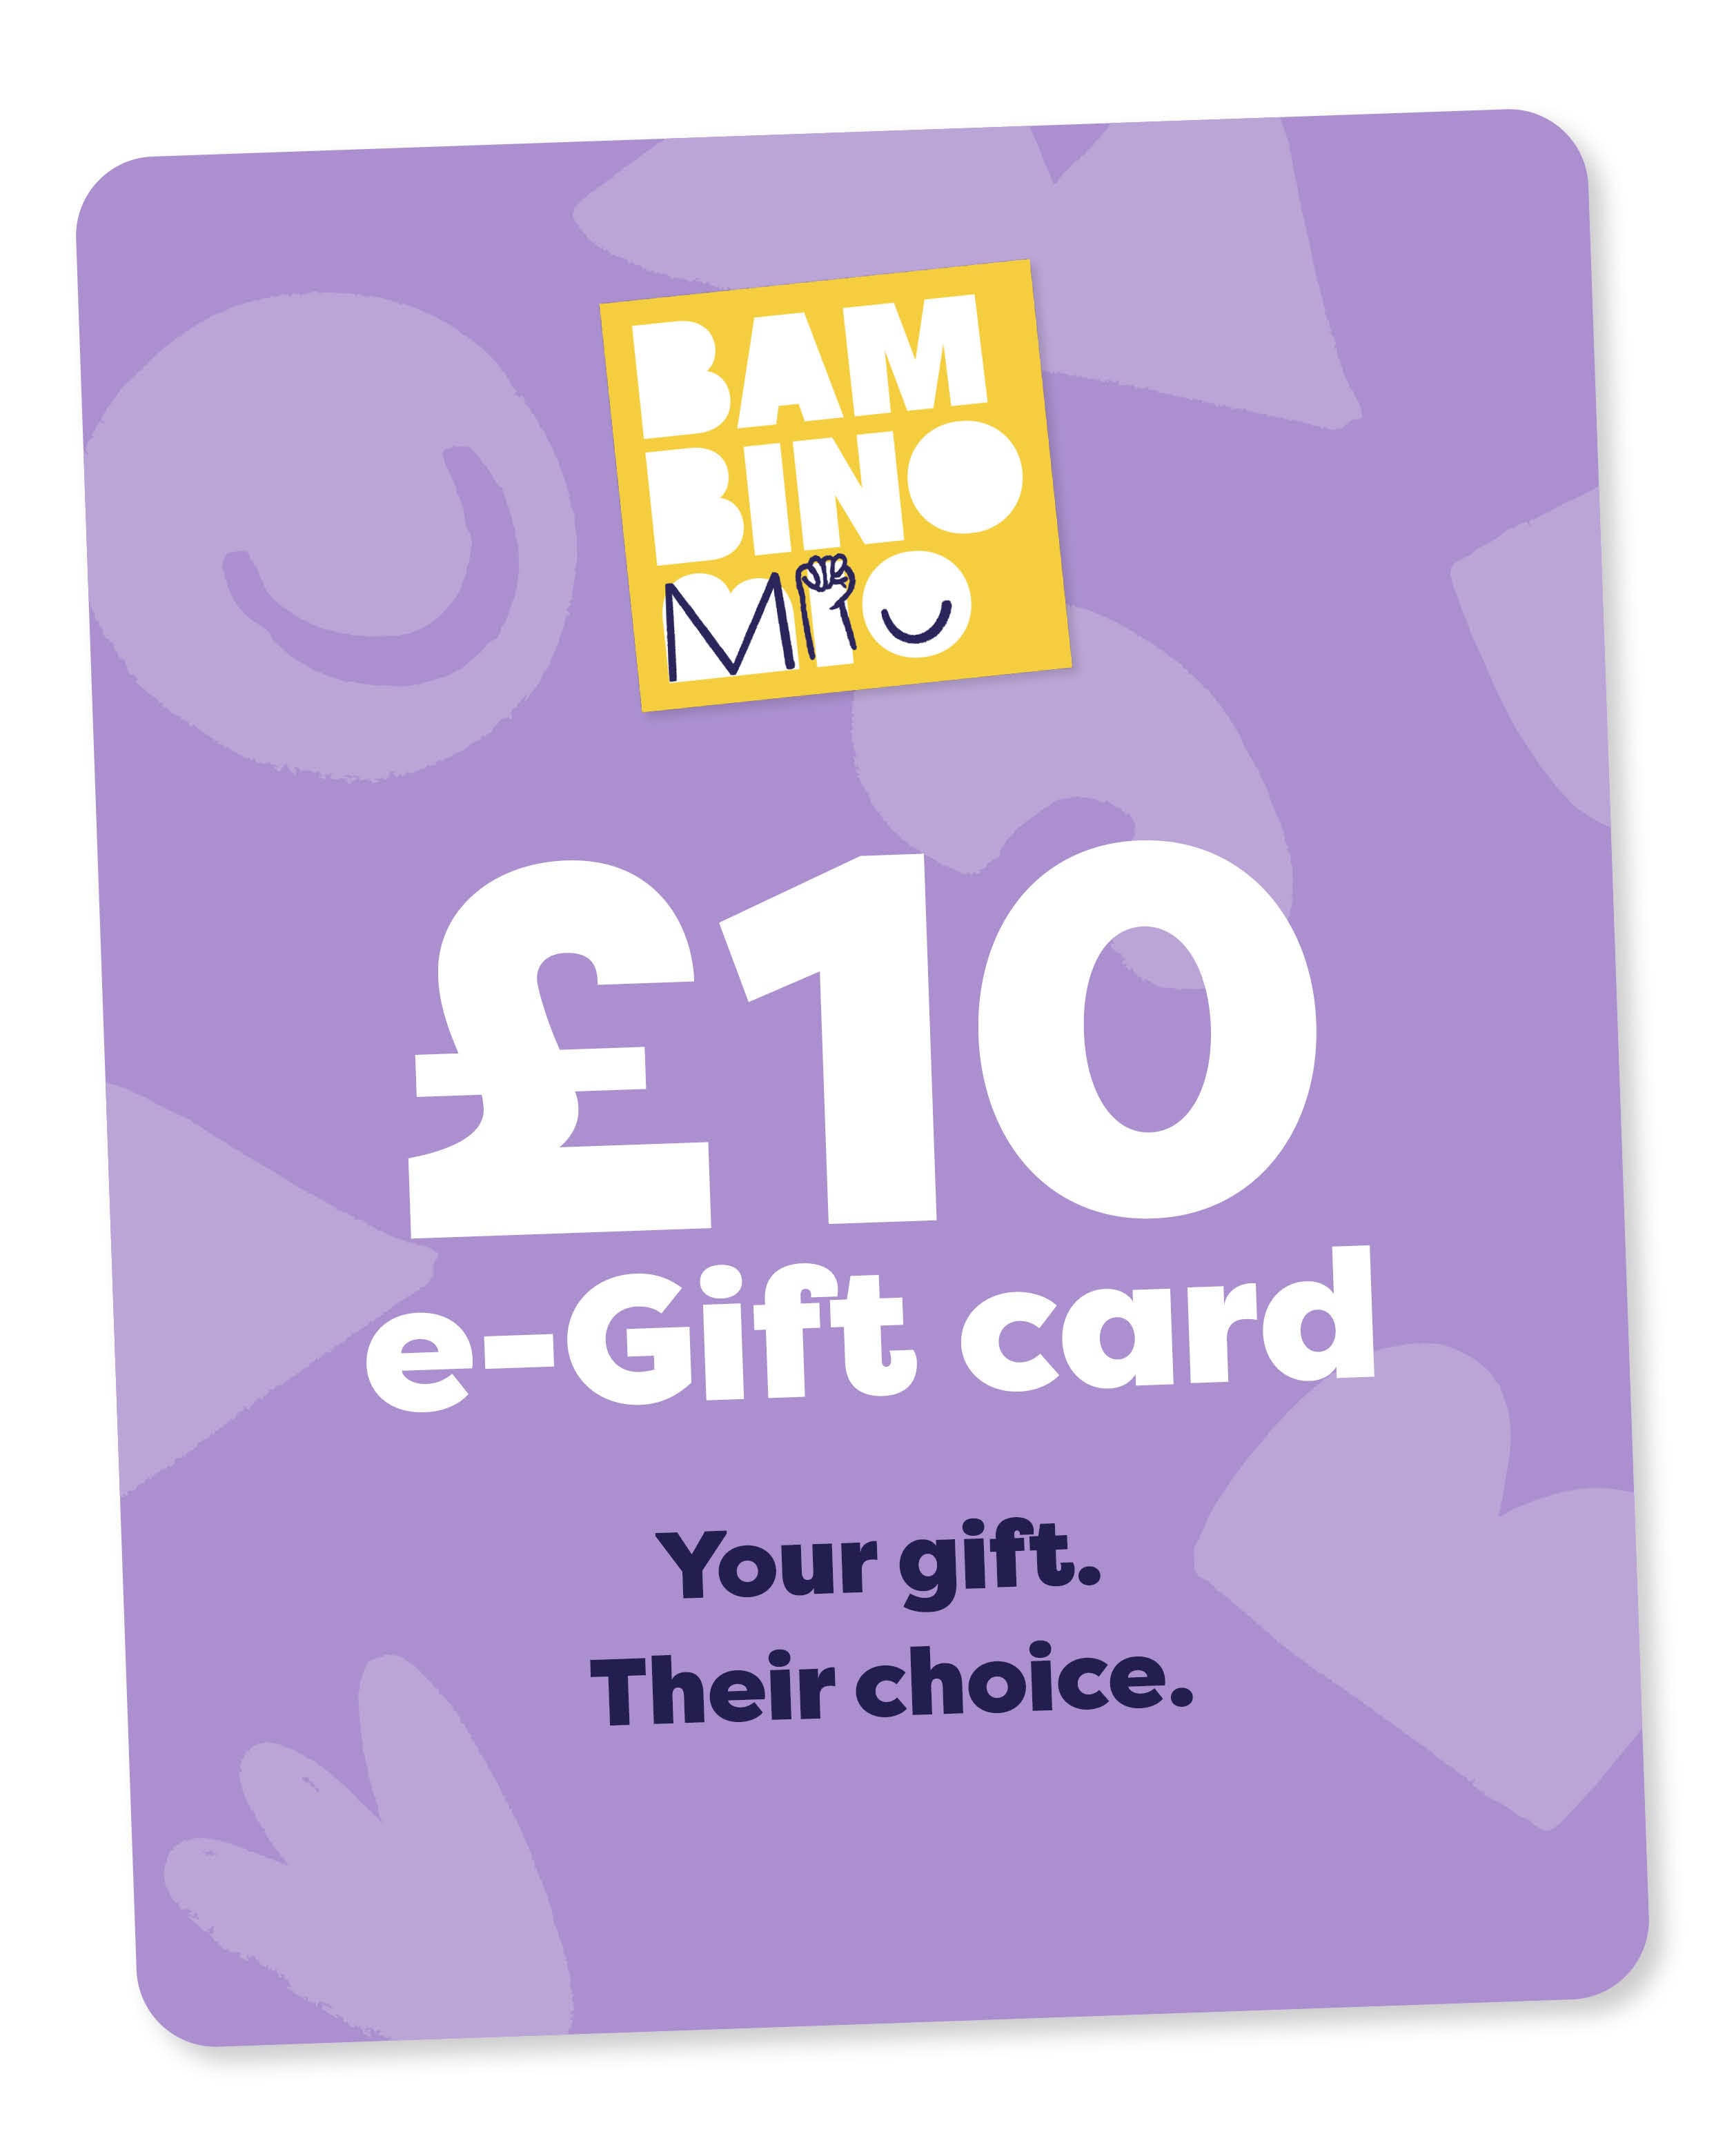 Bambino Mio e-gift card - Bambino Mio (UK & IE)